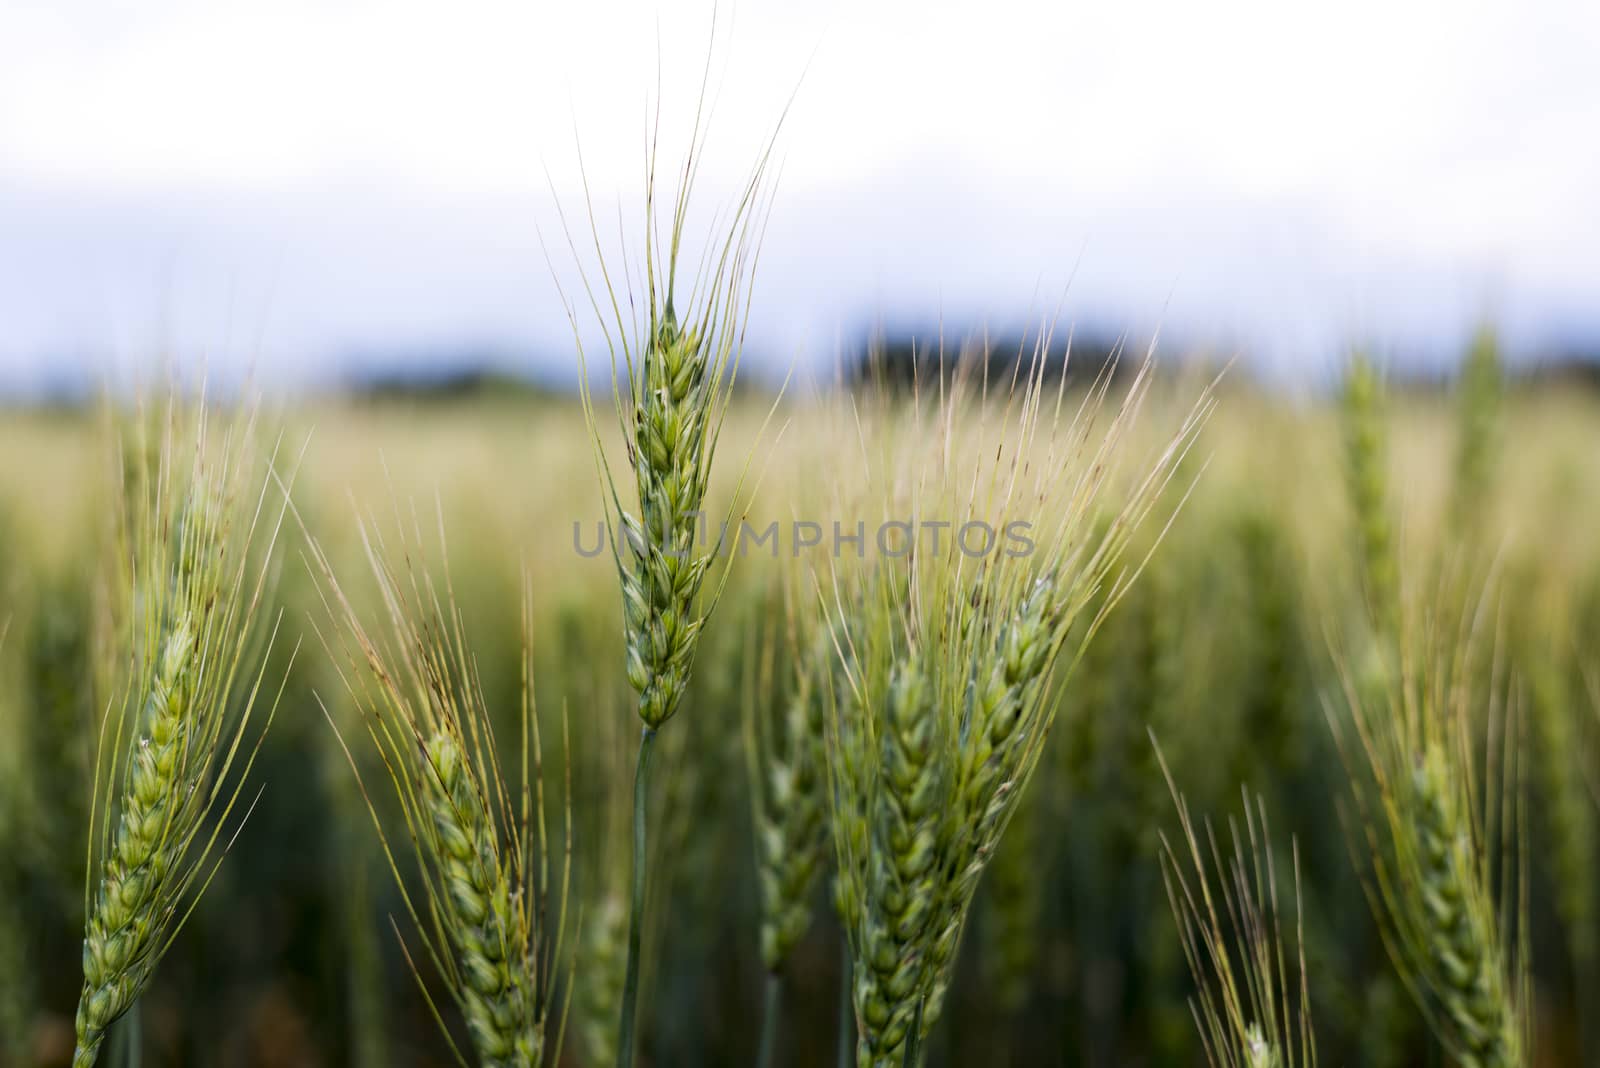 Grain head of wheat plant against field background by TSLPhoto